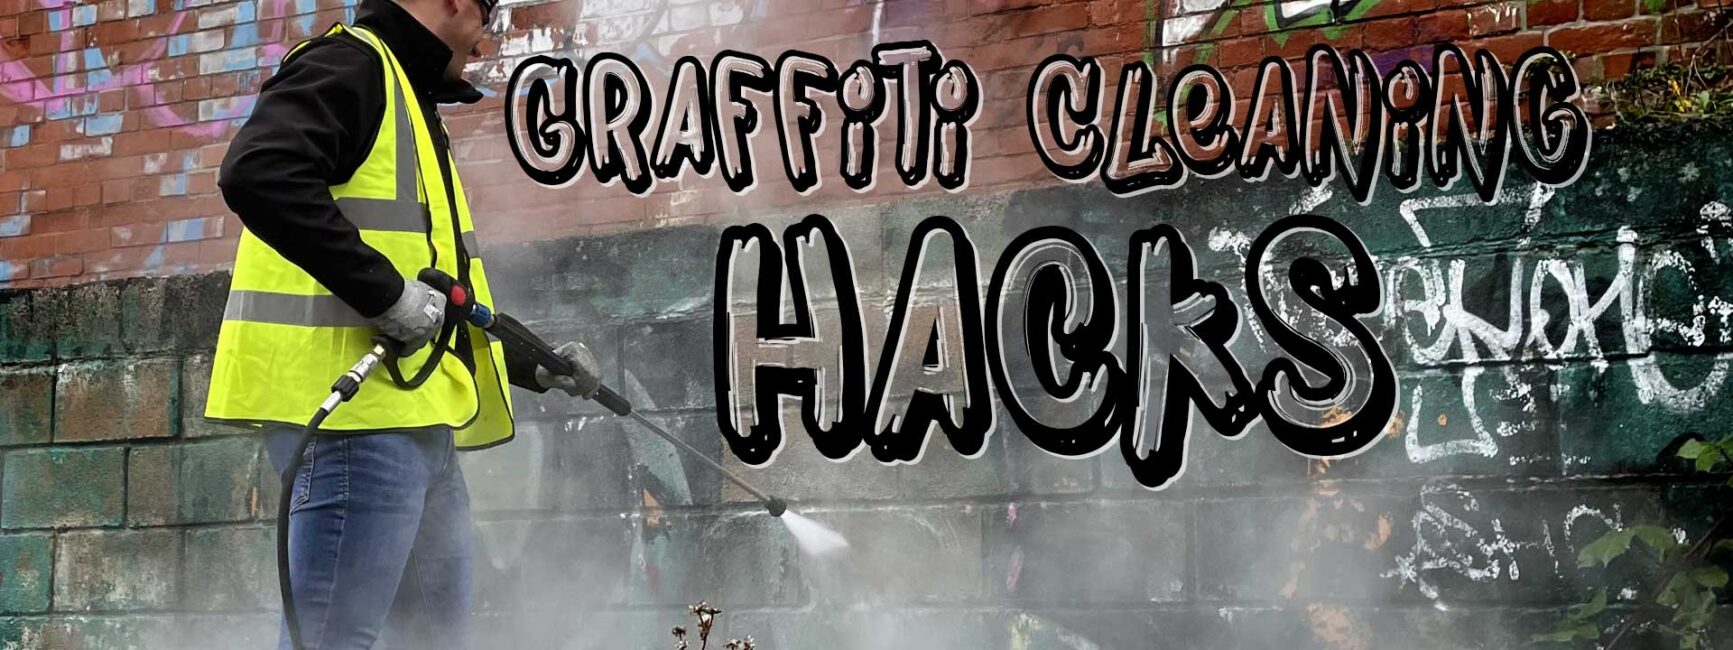 Graffiti Cleaning Ideas banner